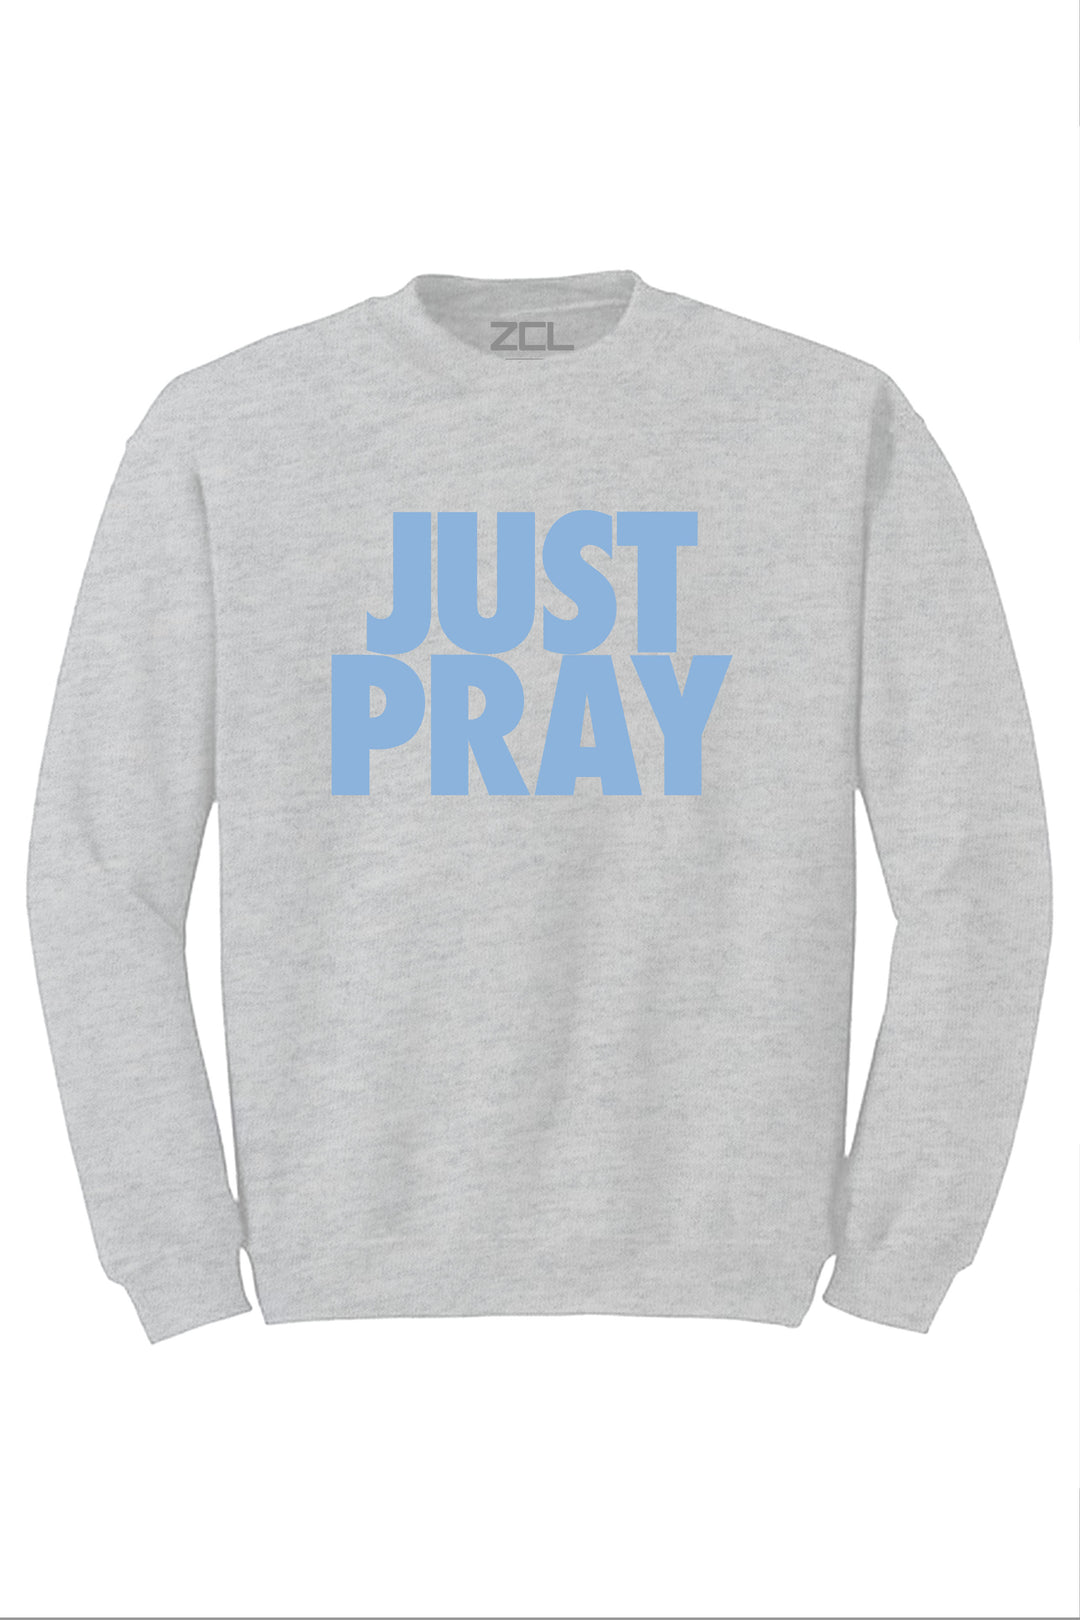 Just Pray Crewneck Sweatshirt (Powder Blue Logo) - Zamage